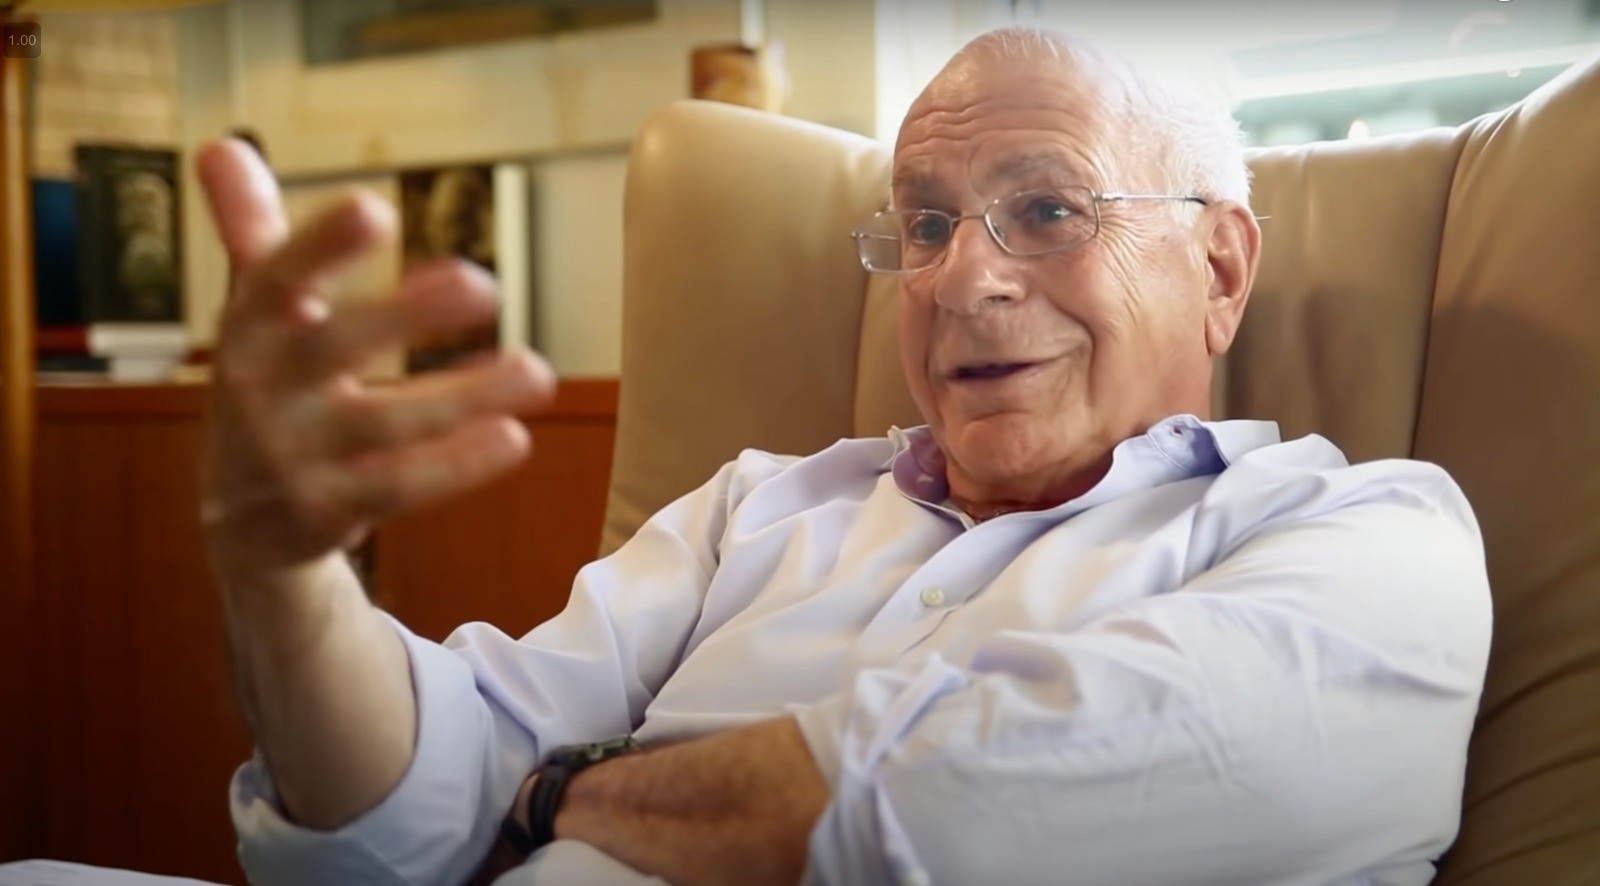 Fernando Schüler entrevista Daniel Kahneman